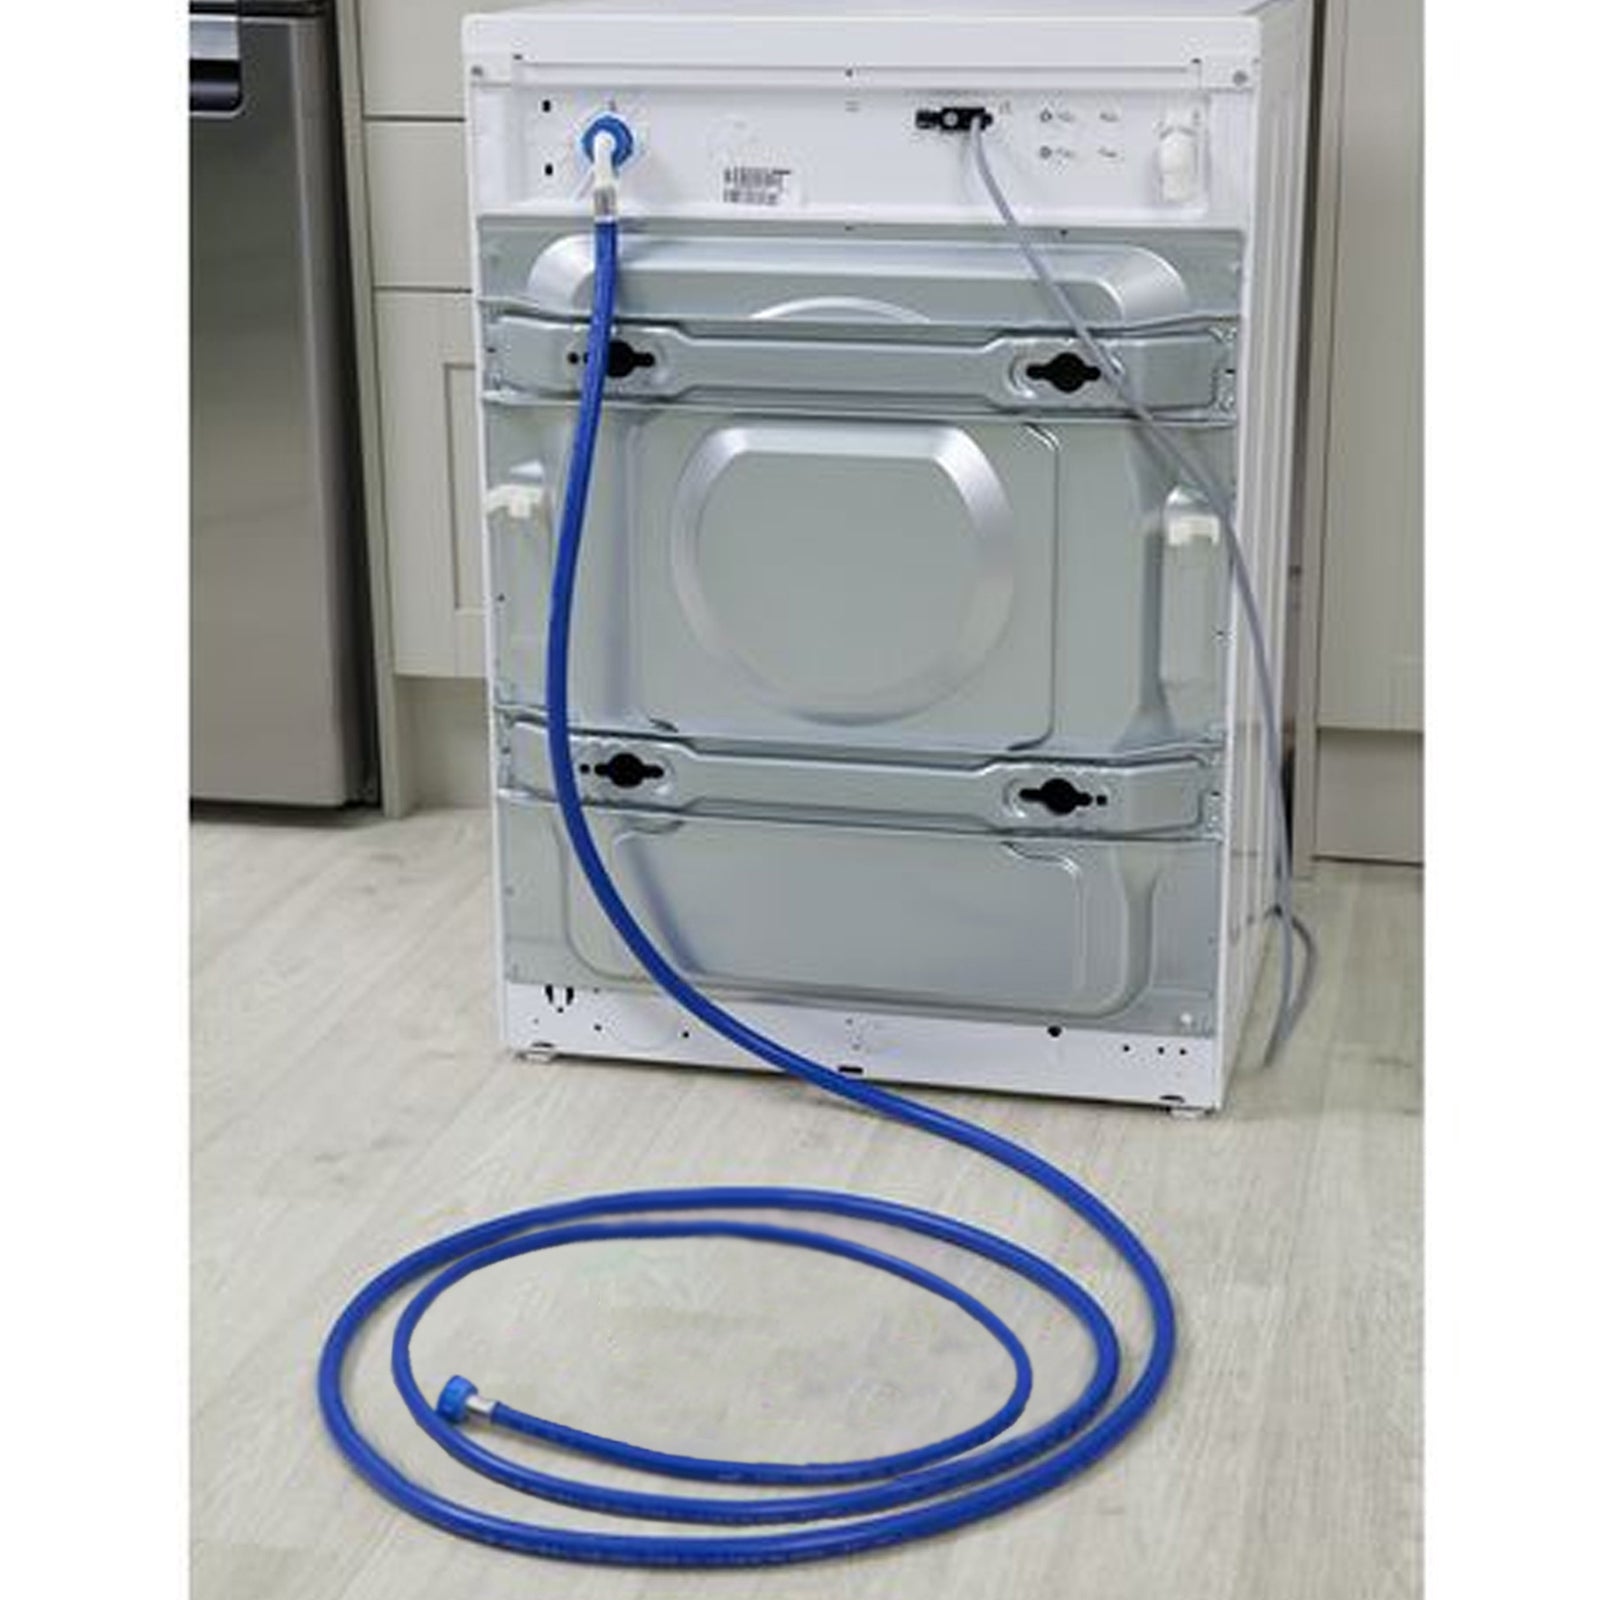 Fill Hose + Drain Hose Extension Set for LOGIK, CURRYS ESSENTIALS, MATSUI Washing Machine & Dishwasher 2.5m + 5m